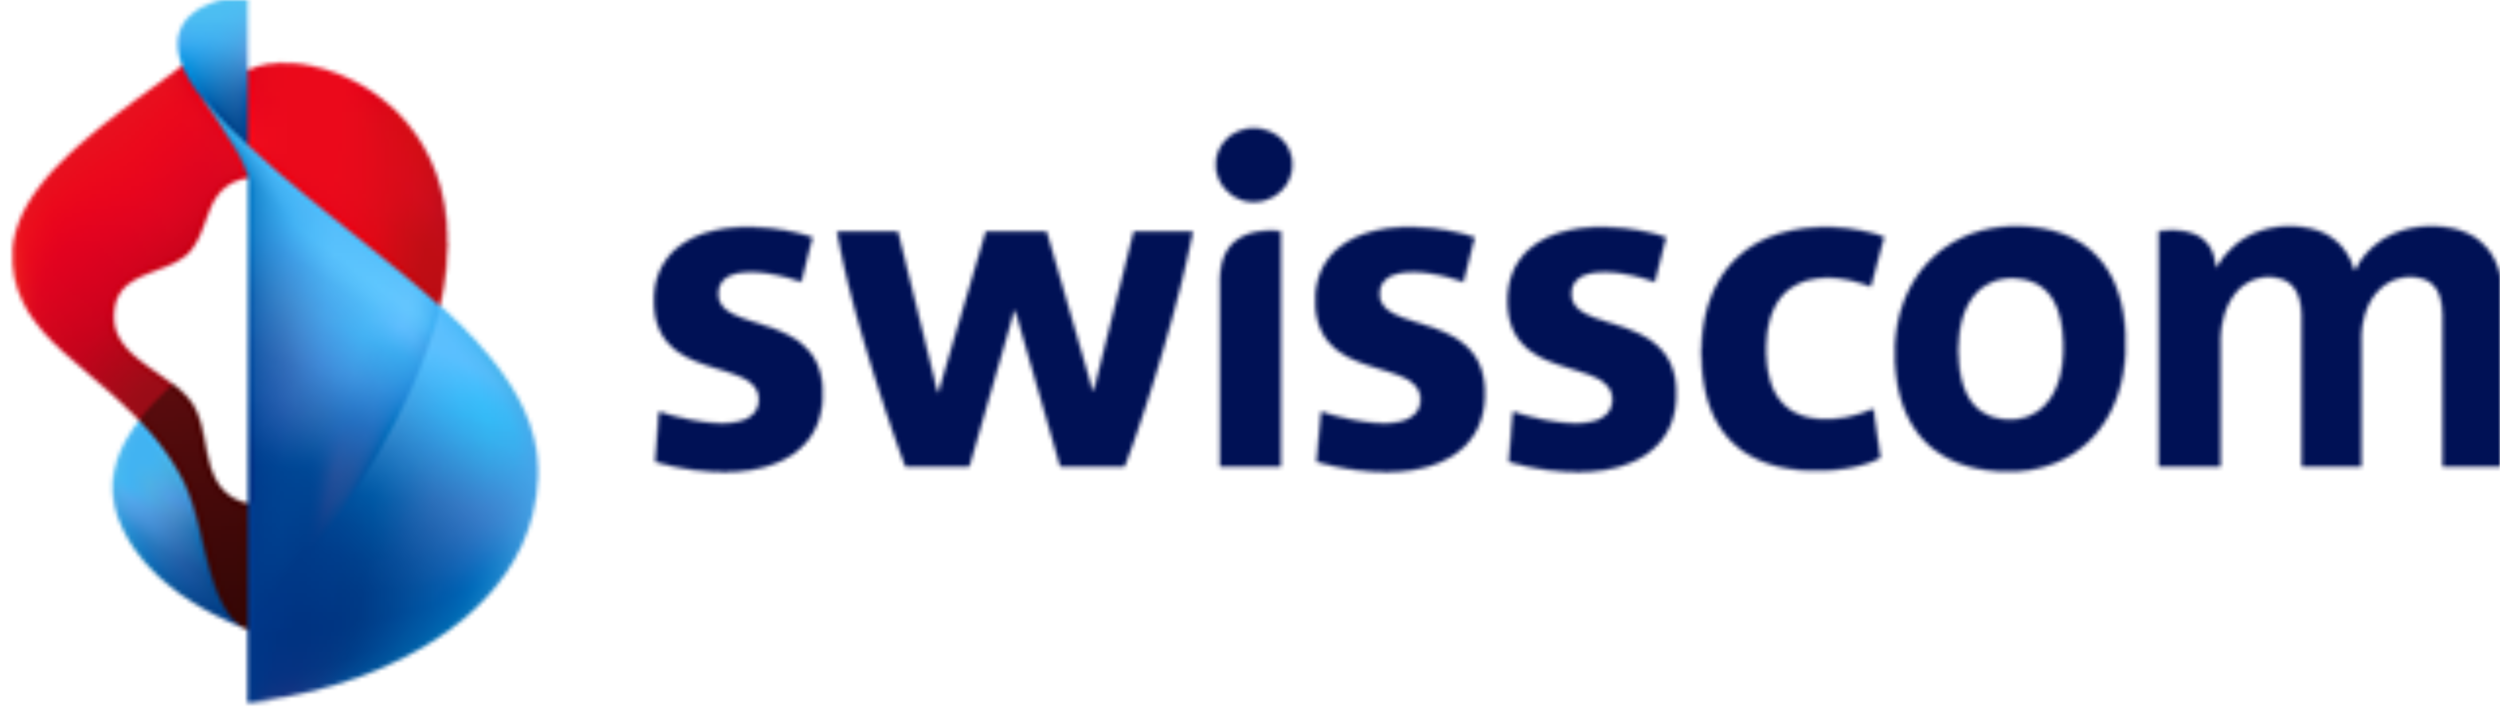 swisscom-logo.png